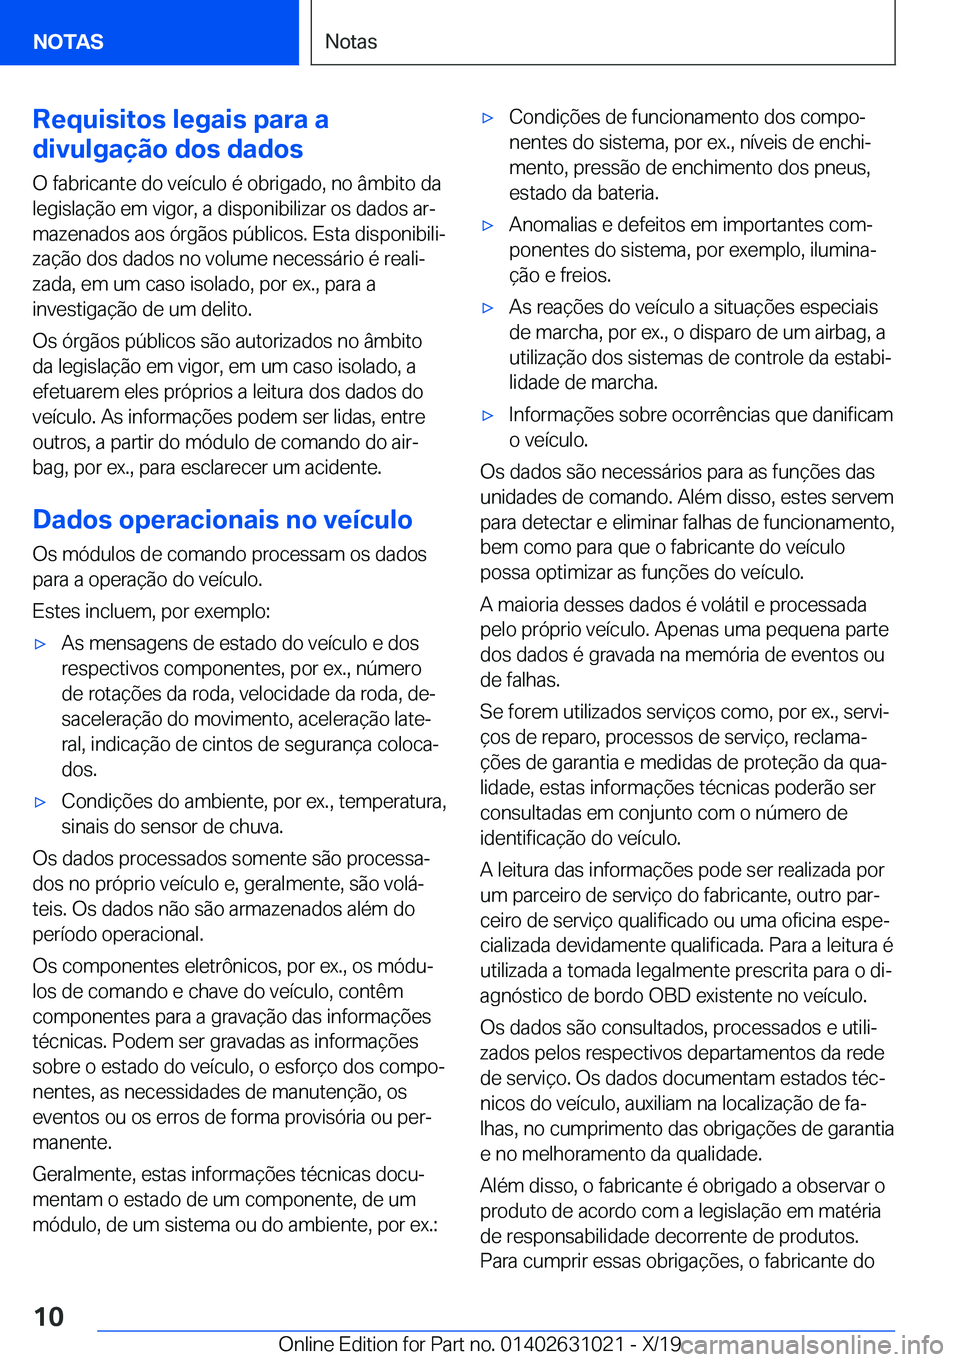 BMW 2 SERIES GRAN COUPE 2020  Manual do condutor (in Portuguese) �R�e�q�u�i�s�i�t�o�s��l�e�g�a�i�s��p�a�r�a��a
�d�i�v�u�l�g�a�